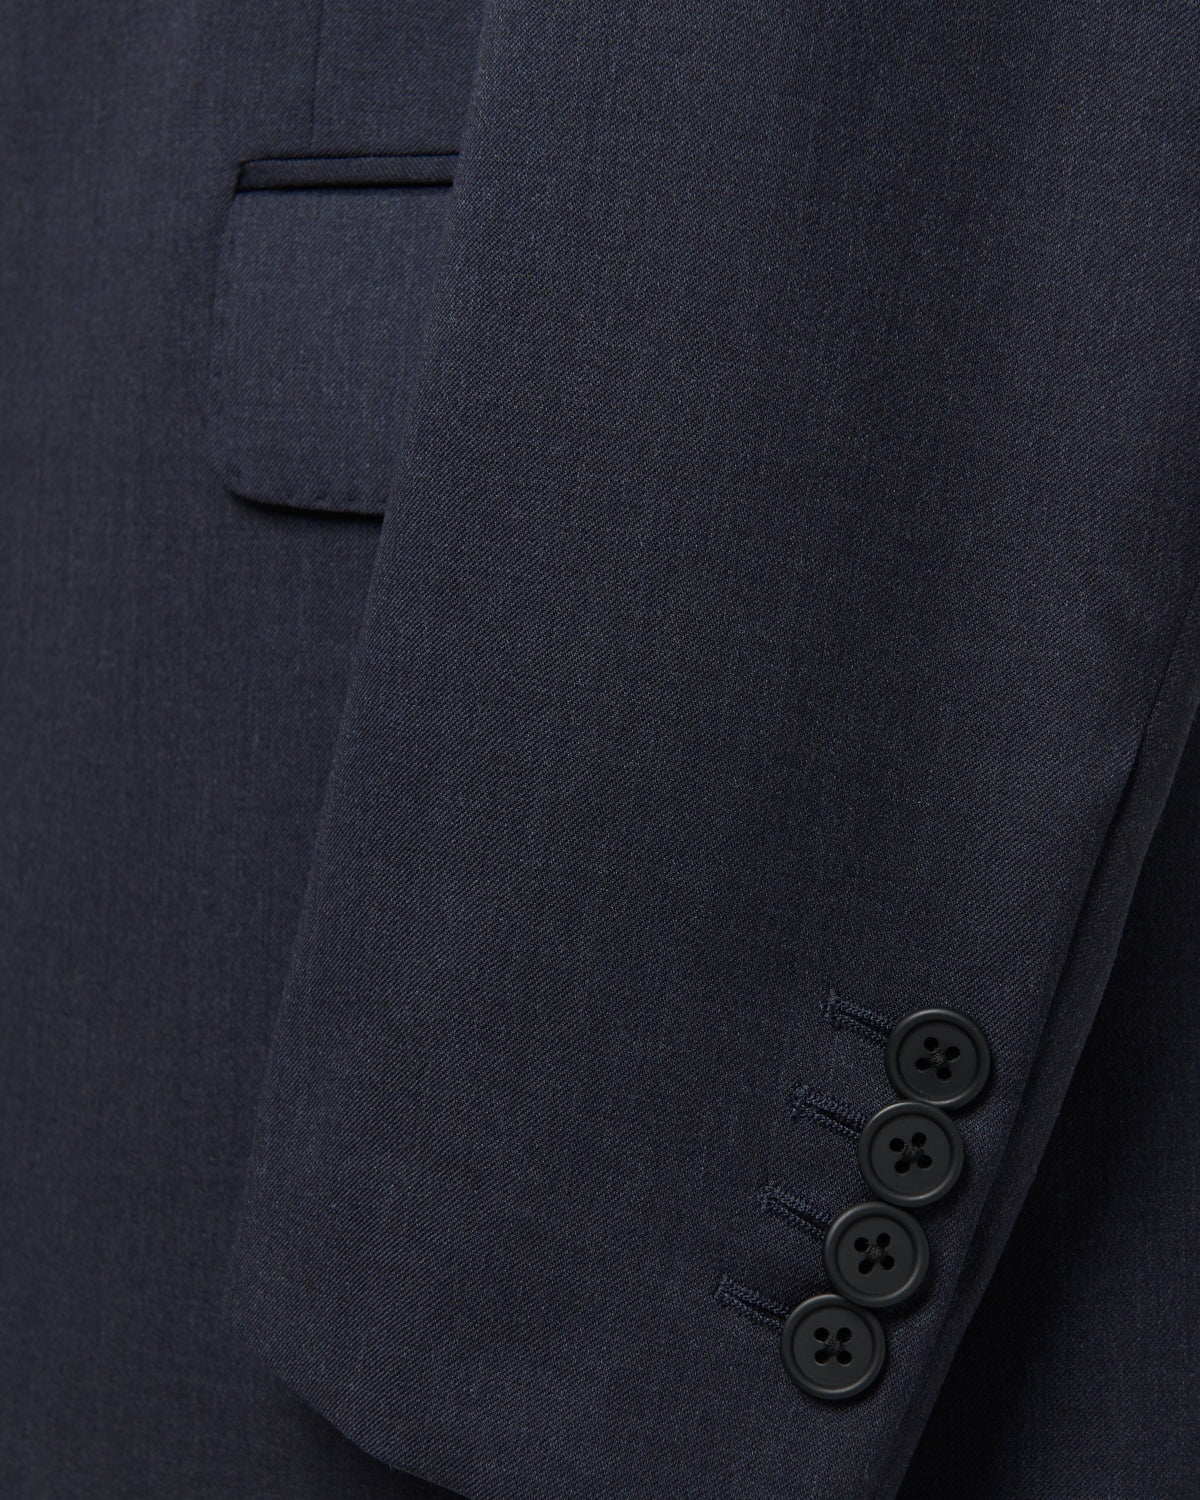 Kilgour Savile Row Tailoring SB1 KG Single Breasted Navy Suit